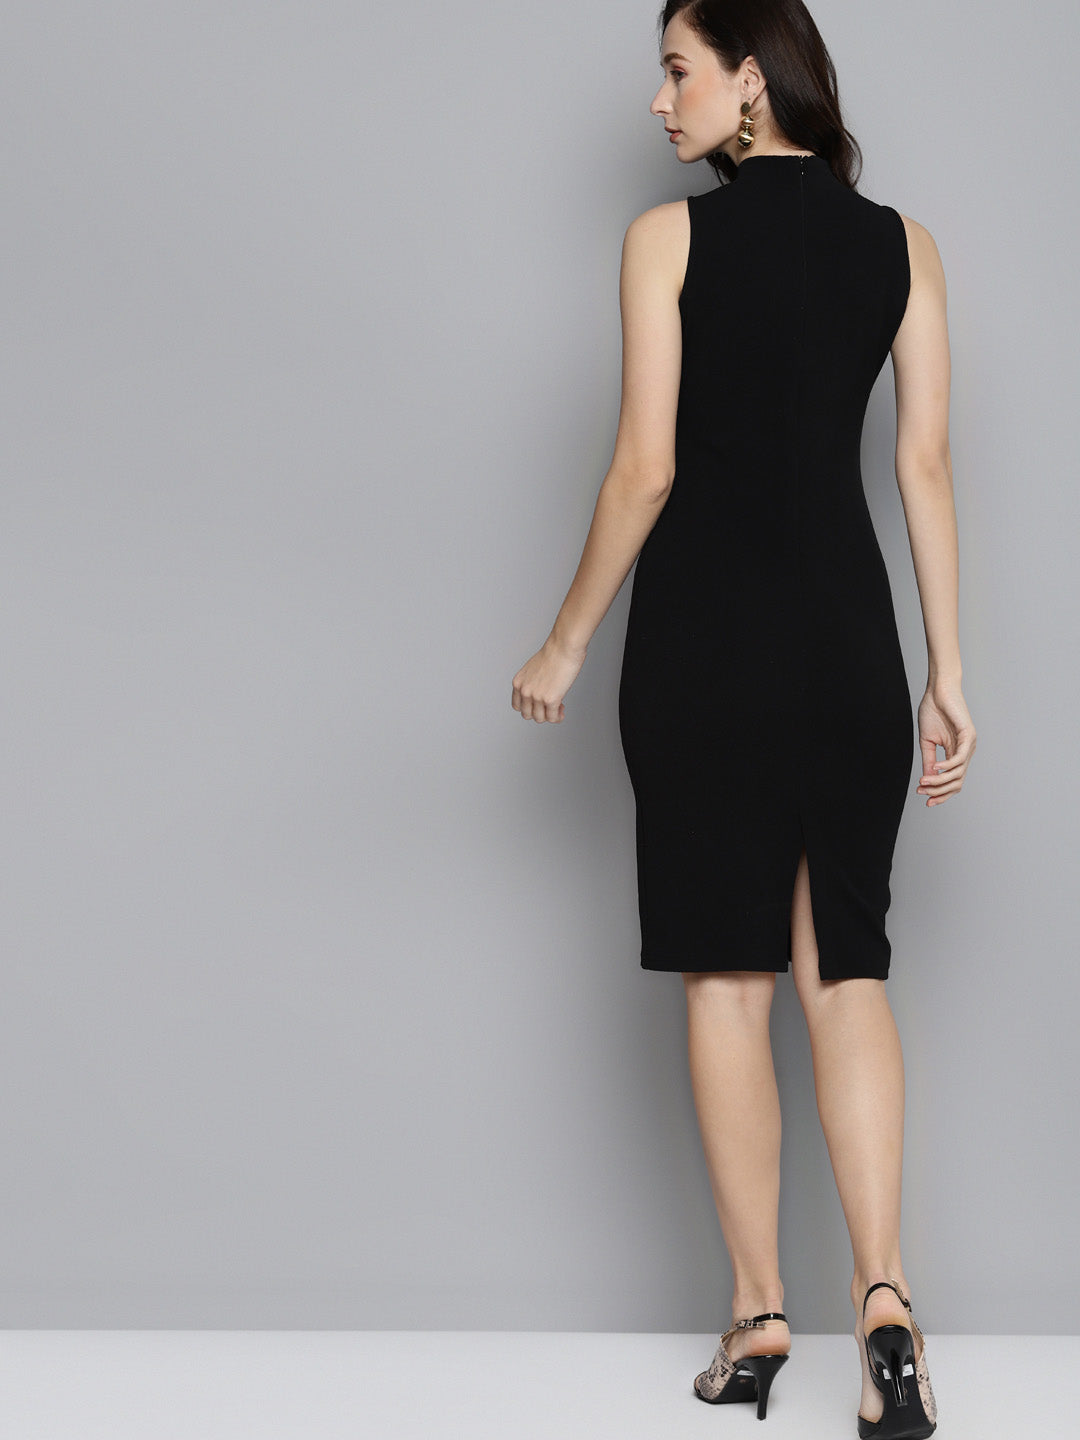 Buy Women Black High Neck Bodycon Dress - Date Night Dress Online India -  FabAlley